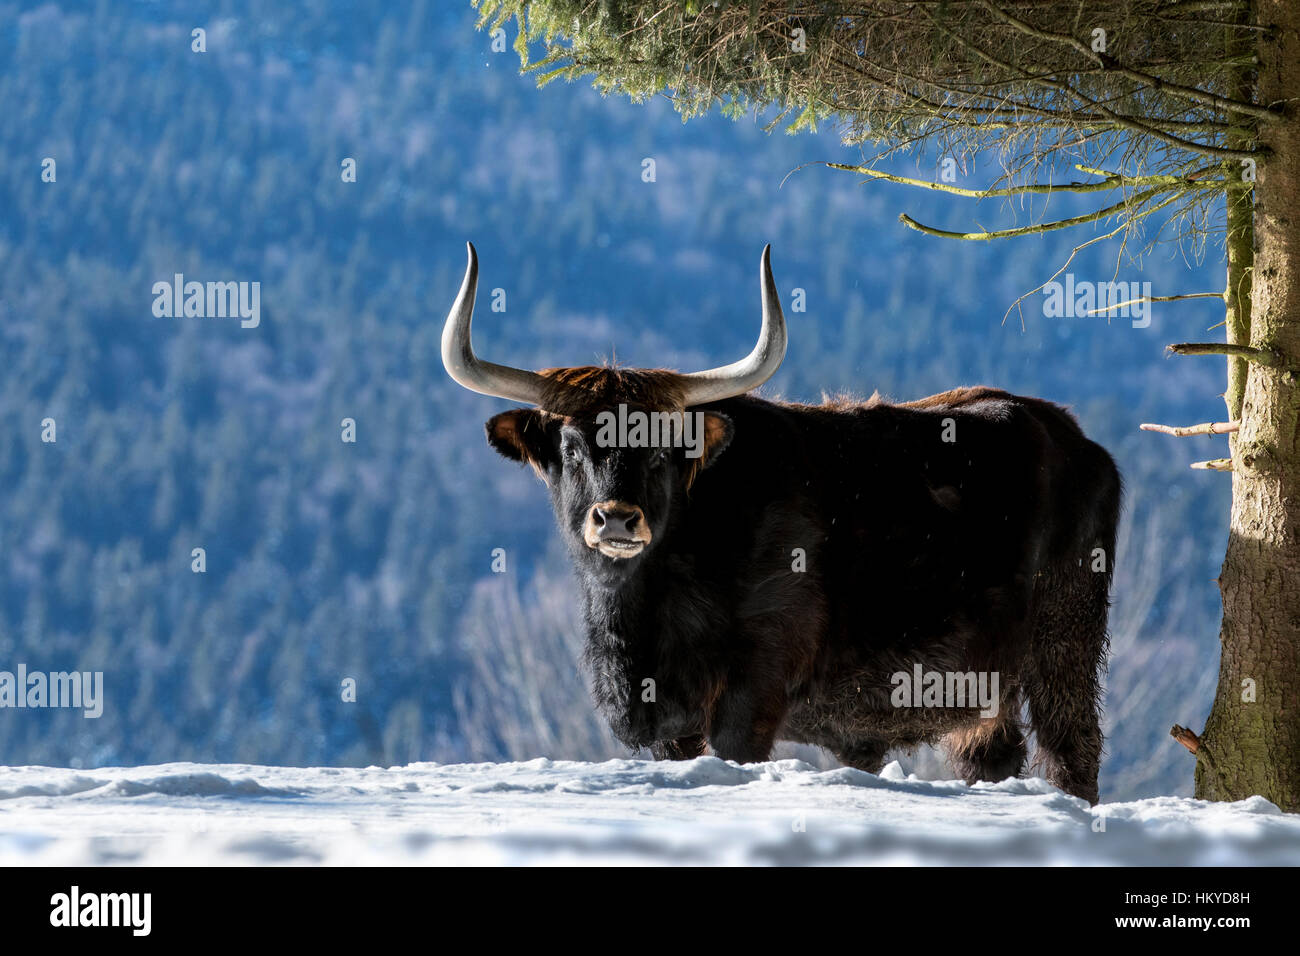 Heck bovins (Bos domesticus) bull en vertu de l'arbre dans la neige en hiver. Tentative de retour la race disparue d'aurochs (Bos primigenius) Banque D'Images